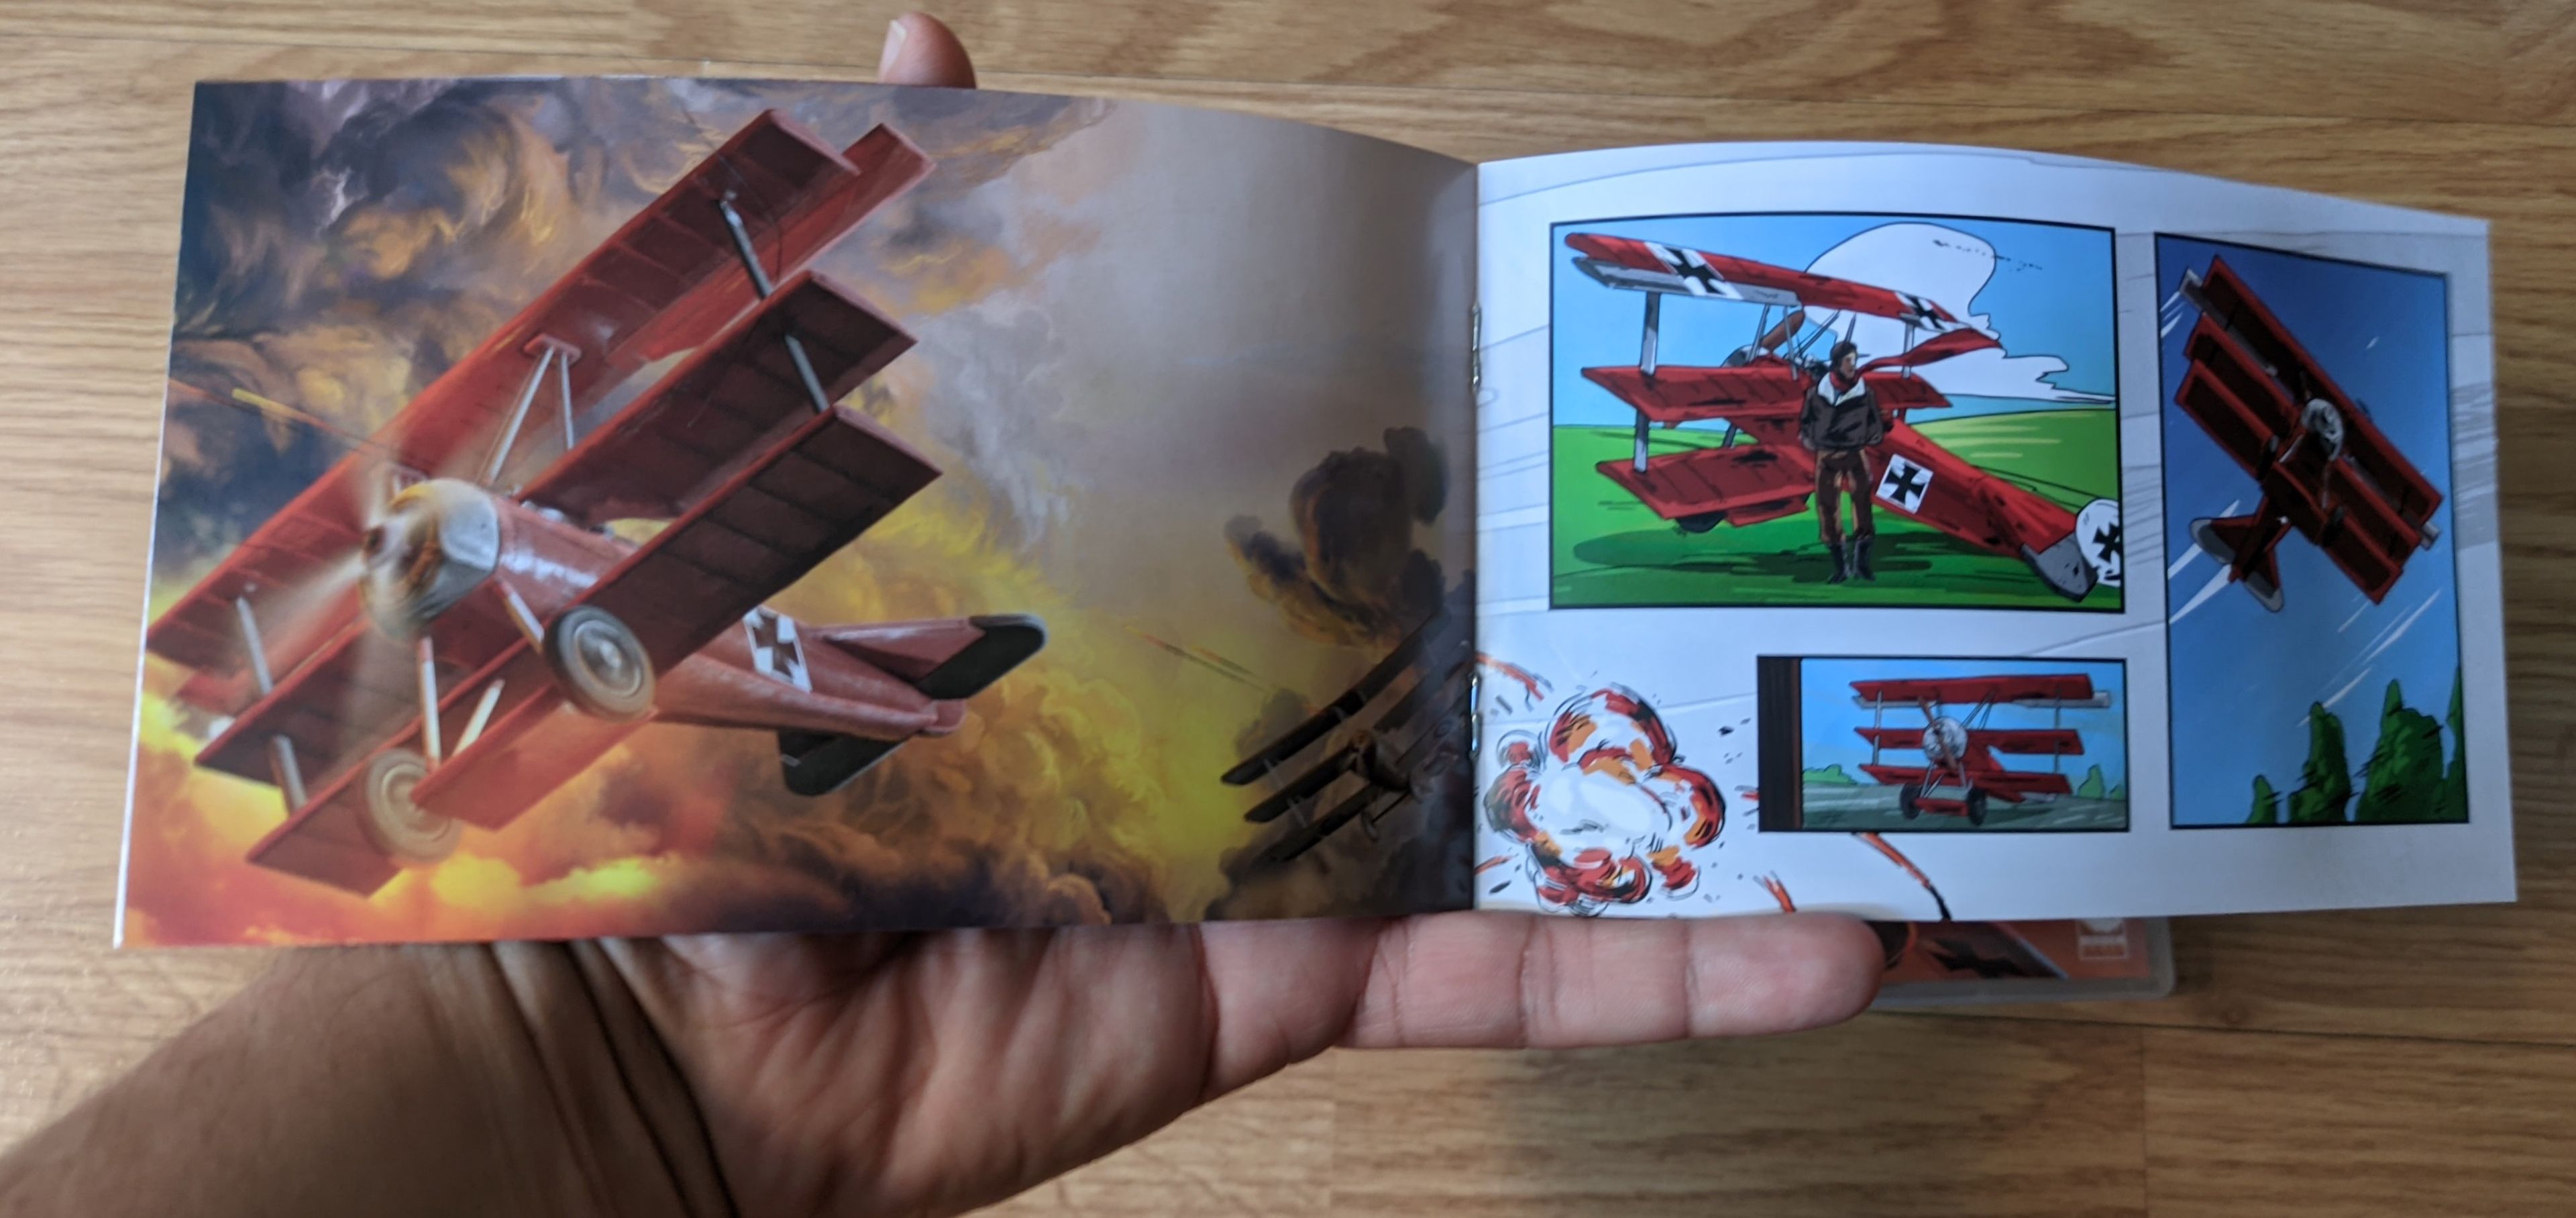 Red Wings edición física Nintendo Switch